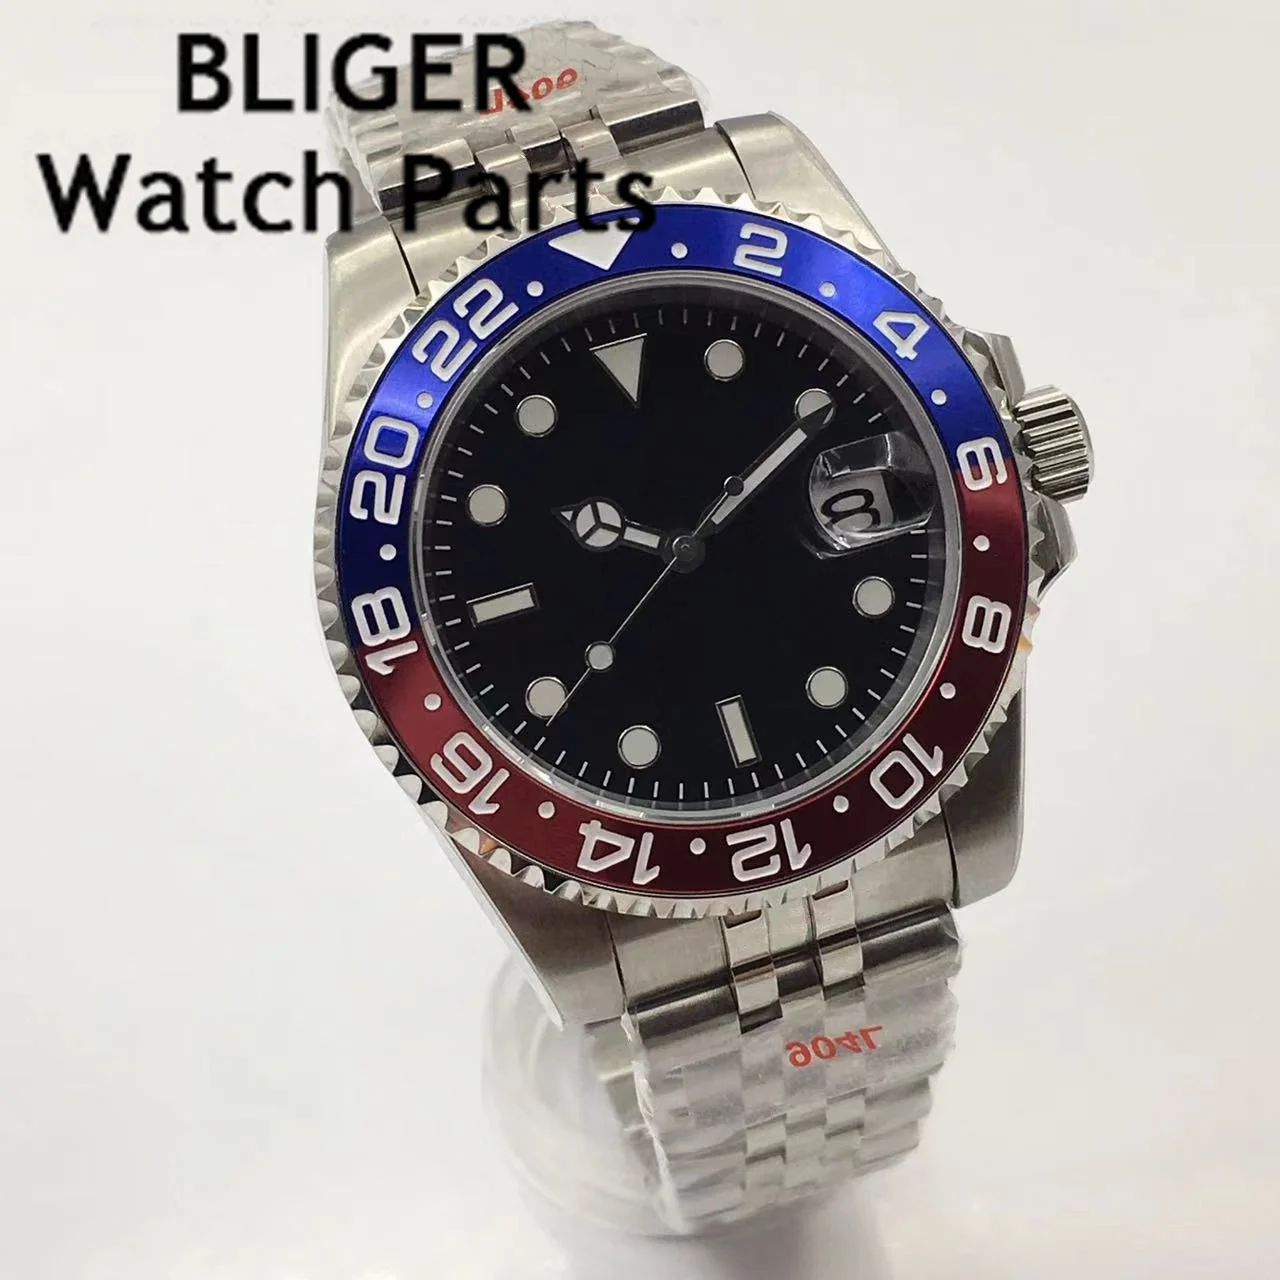 

BLIGER 40mm Automatic Watch Oyster Bracelet NH35 MIYOTA 8215 PT5000 Movement Sapphire Crystal Black Luminous Dial Red Blue Bezel